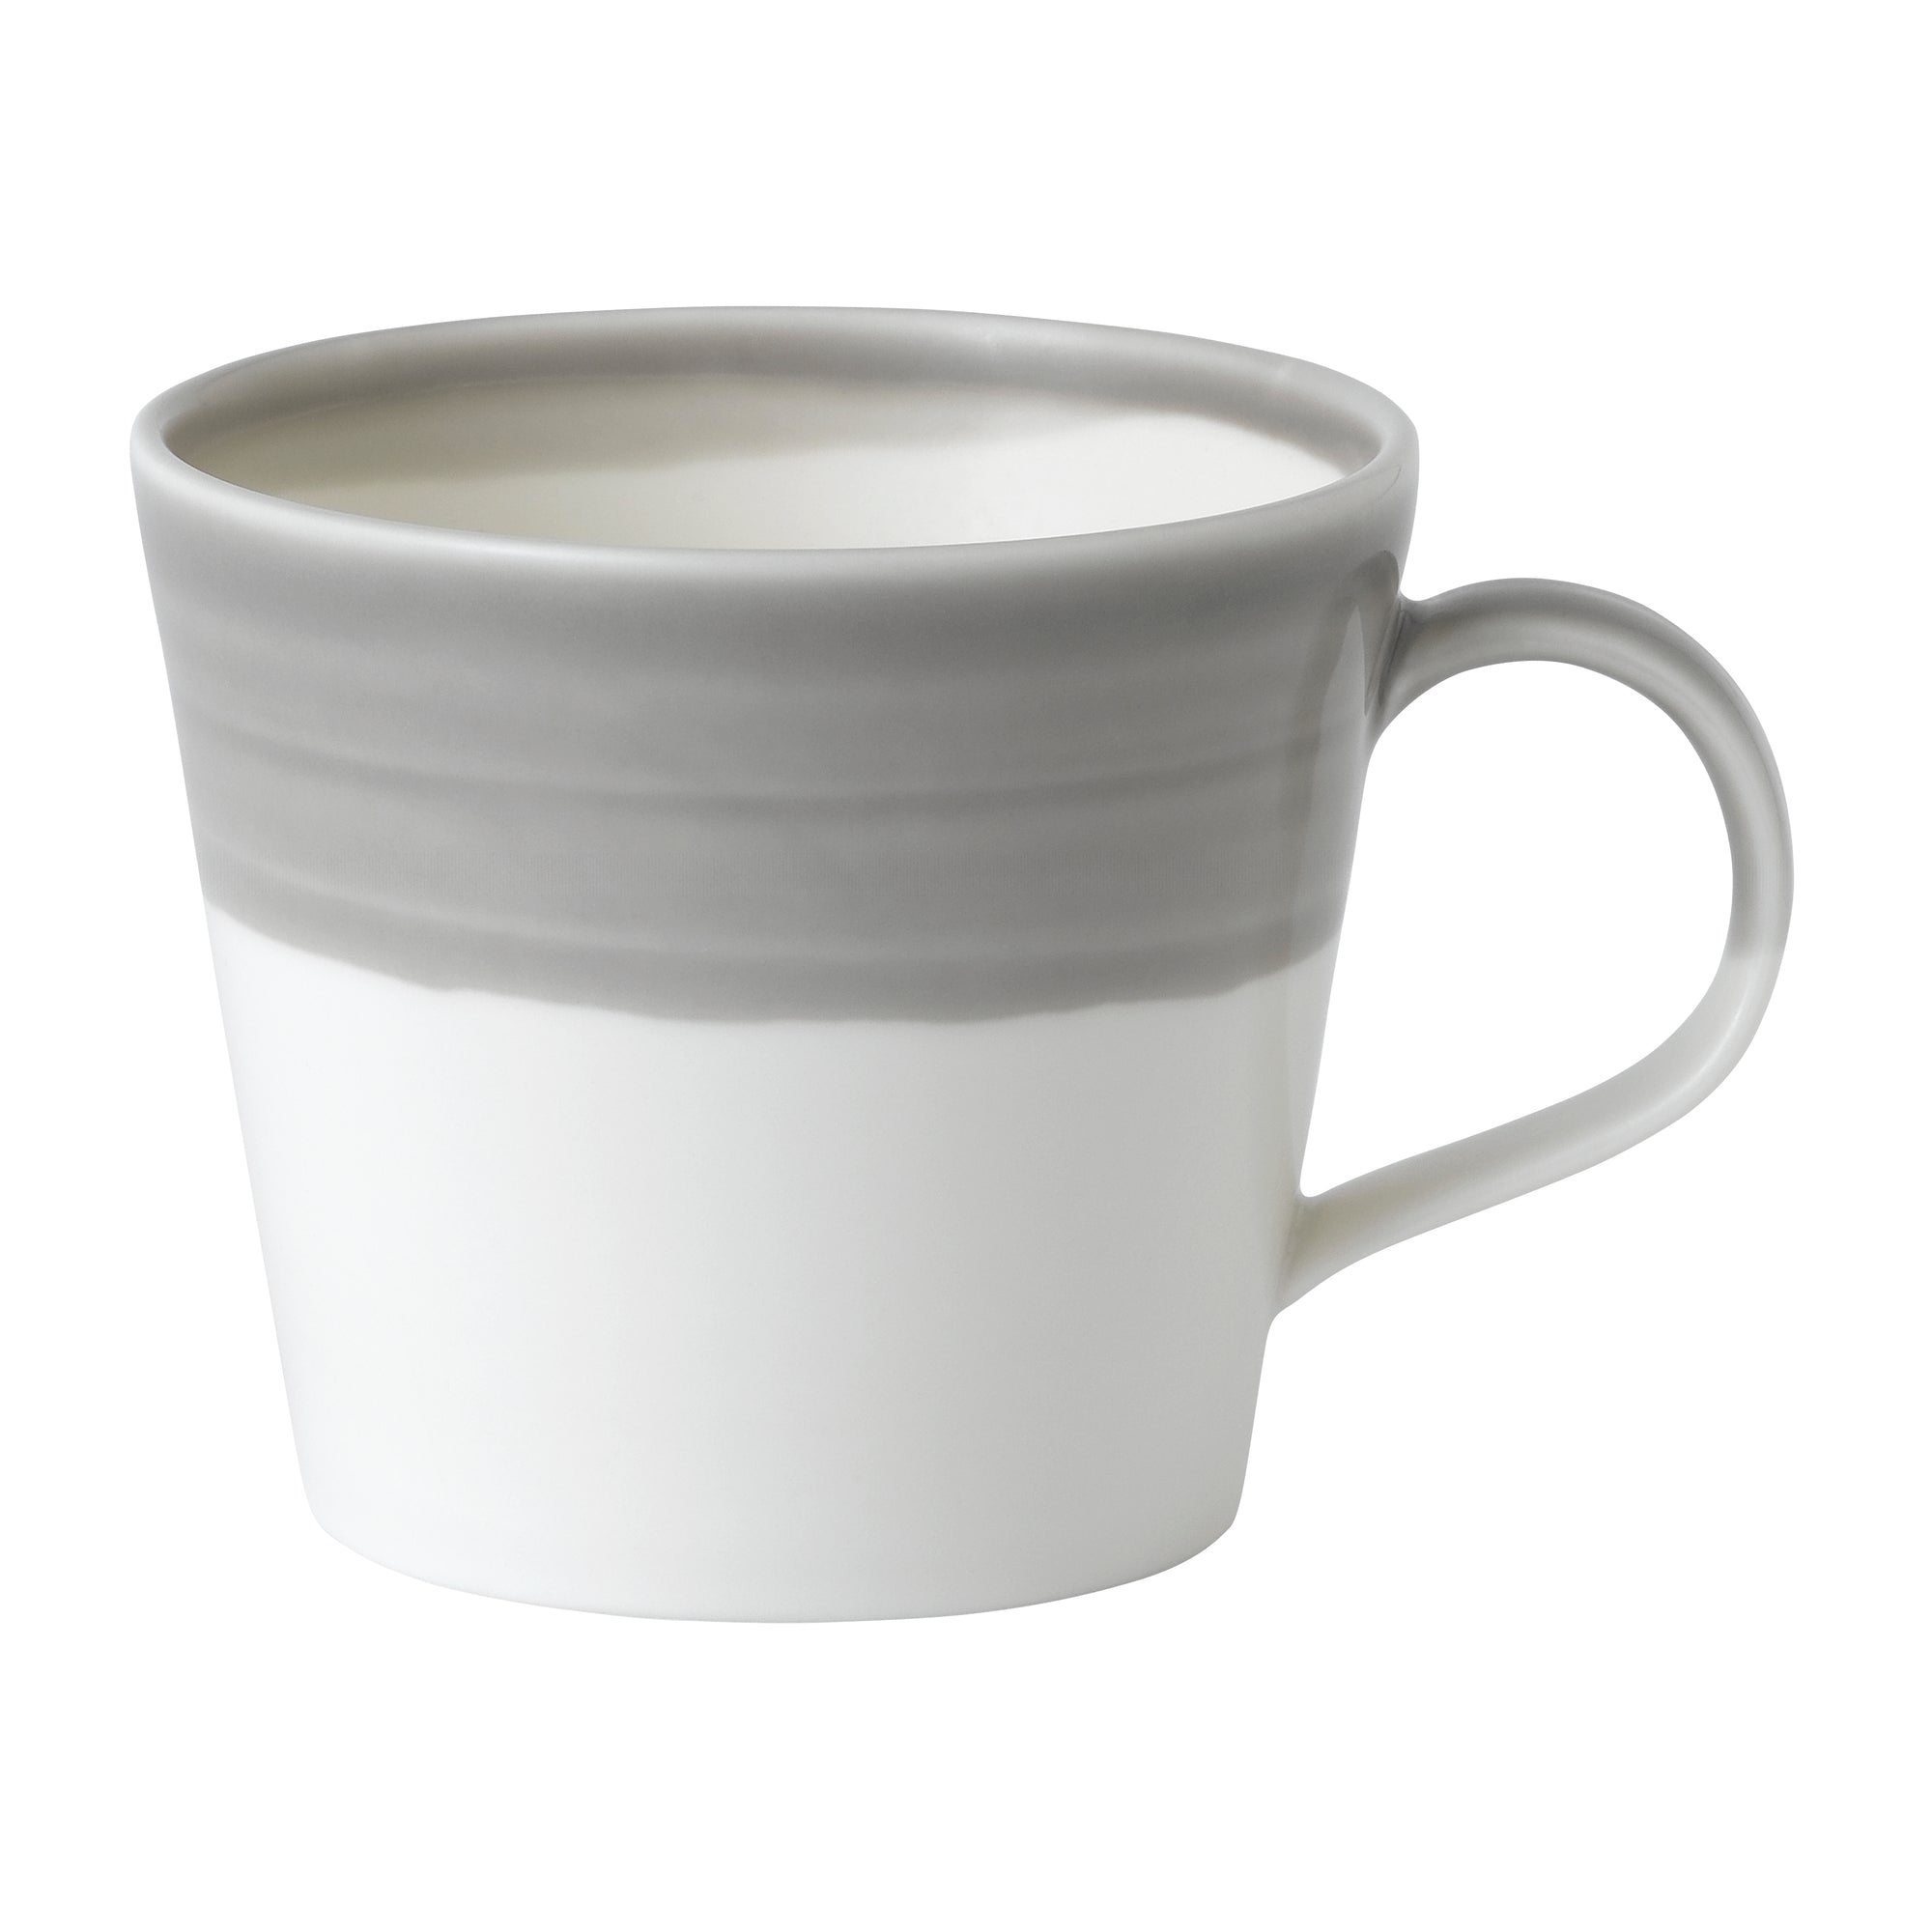 Royal Doulton Coffee Studio Mug 400ml Light Grey - Last Chance to Buy